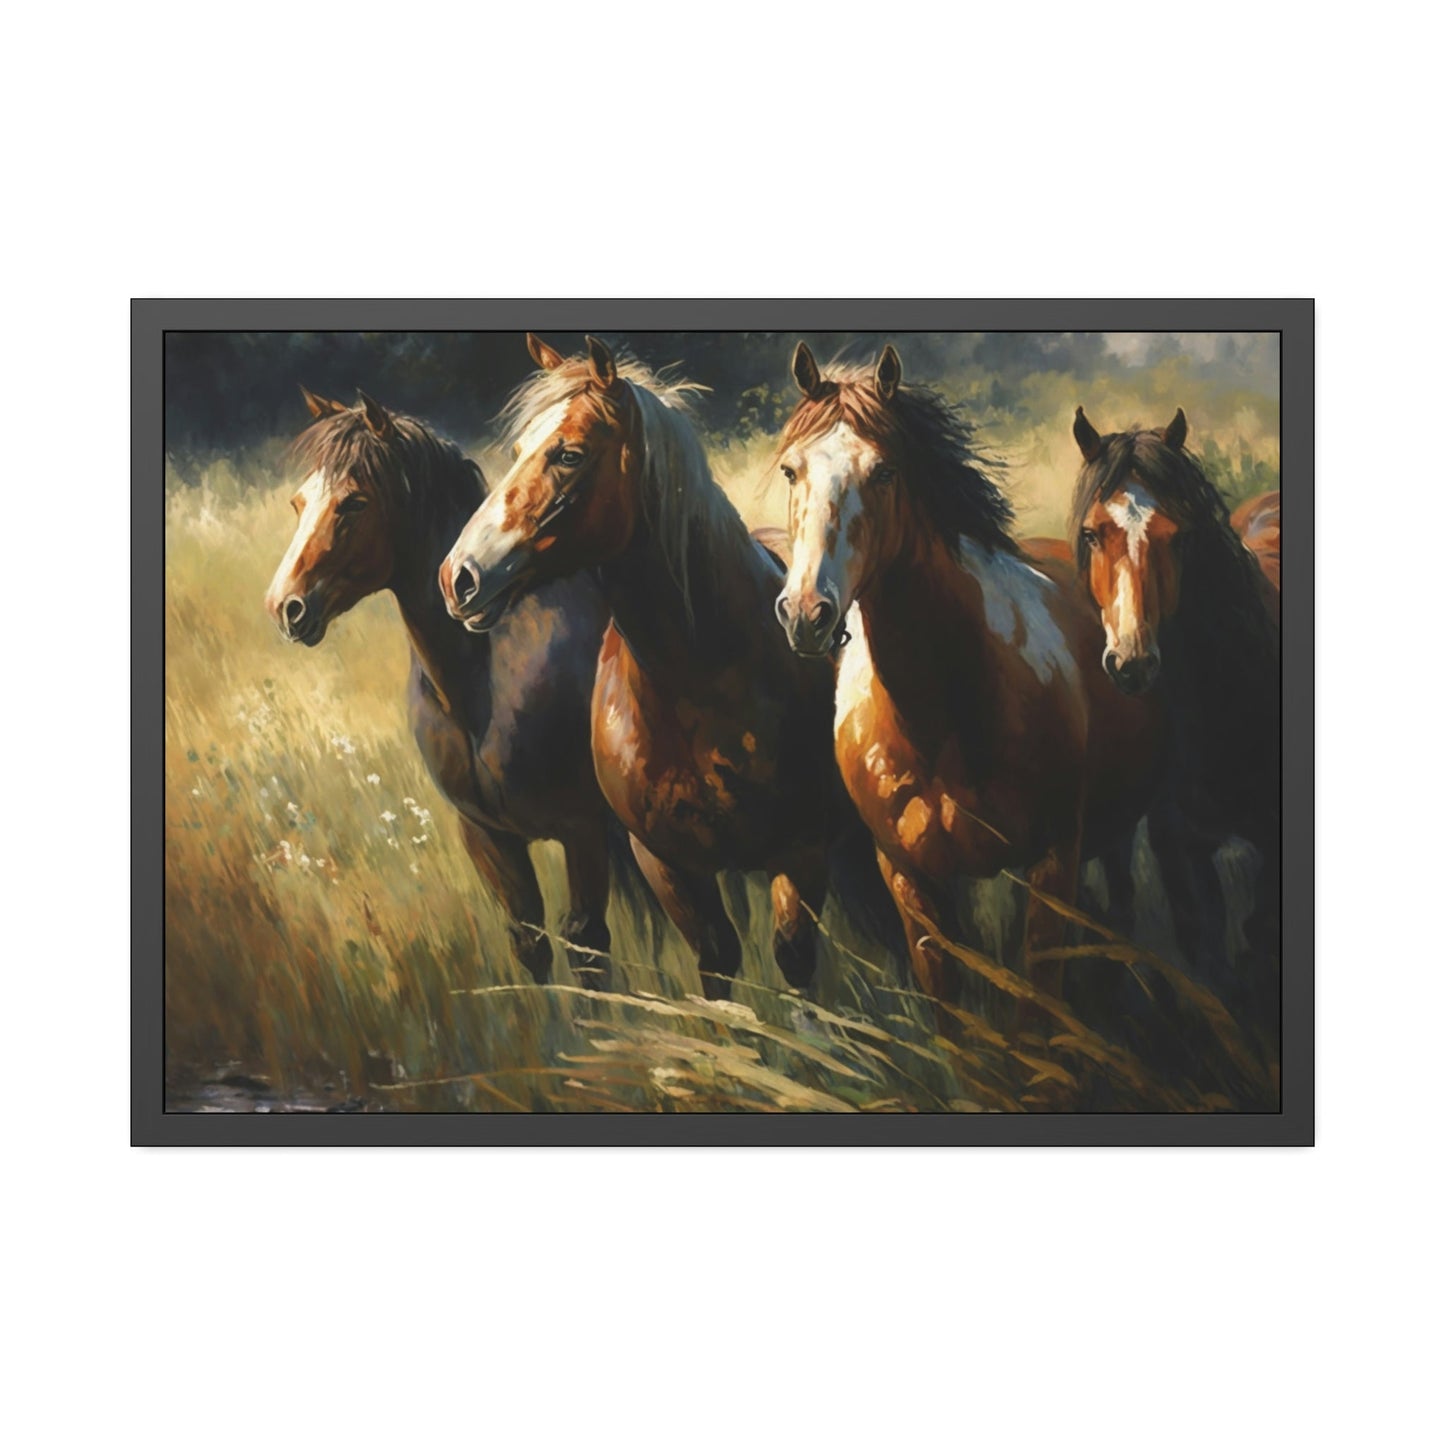 Horses at Dawn: A Canvas Landscape